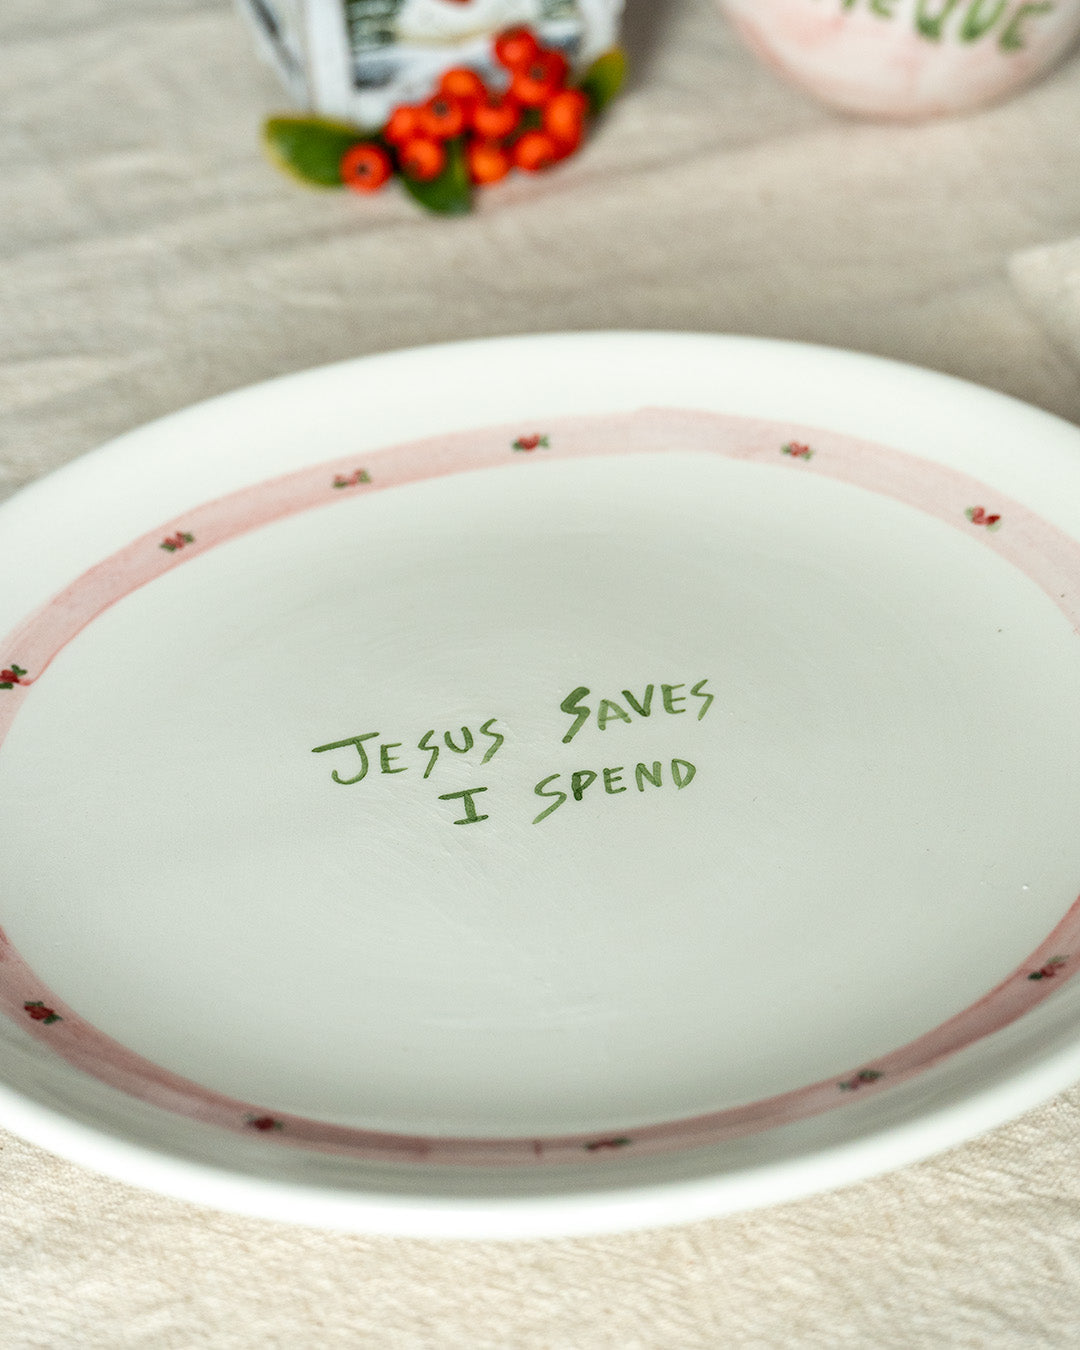 "Jesus Saves I Spend" plate